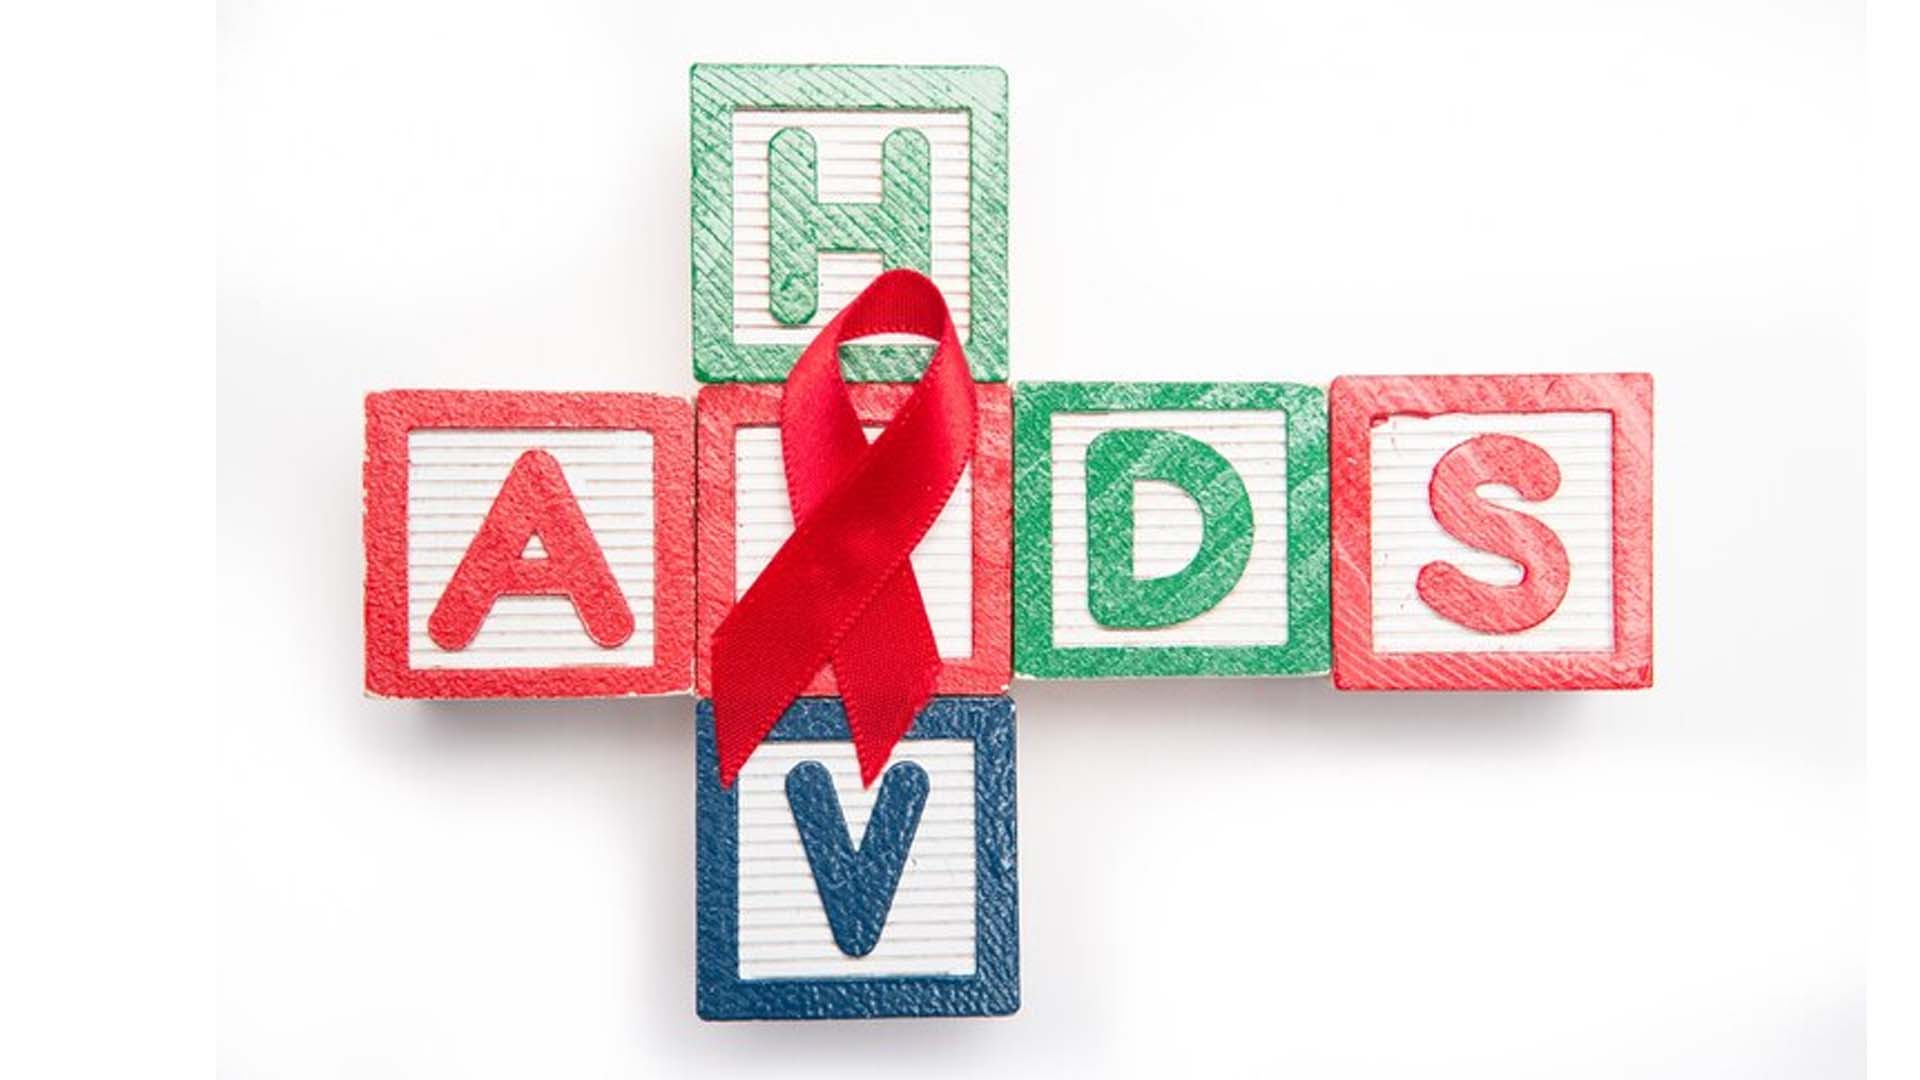 HIV Aids Written on blocks